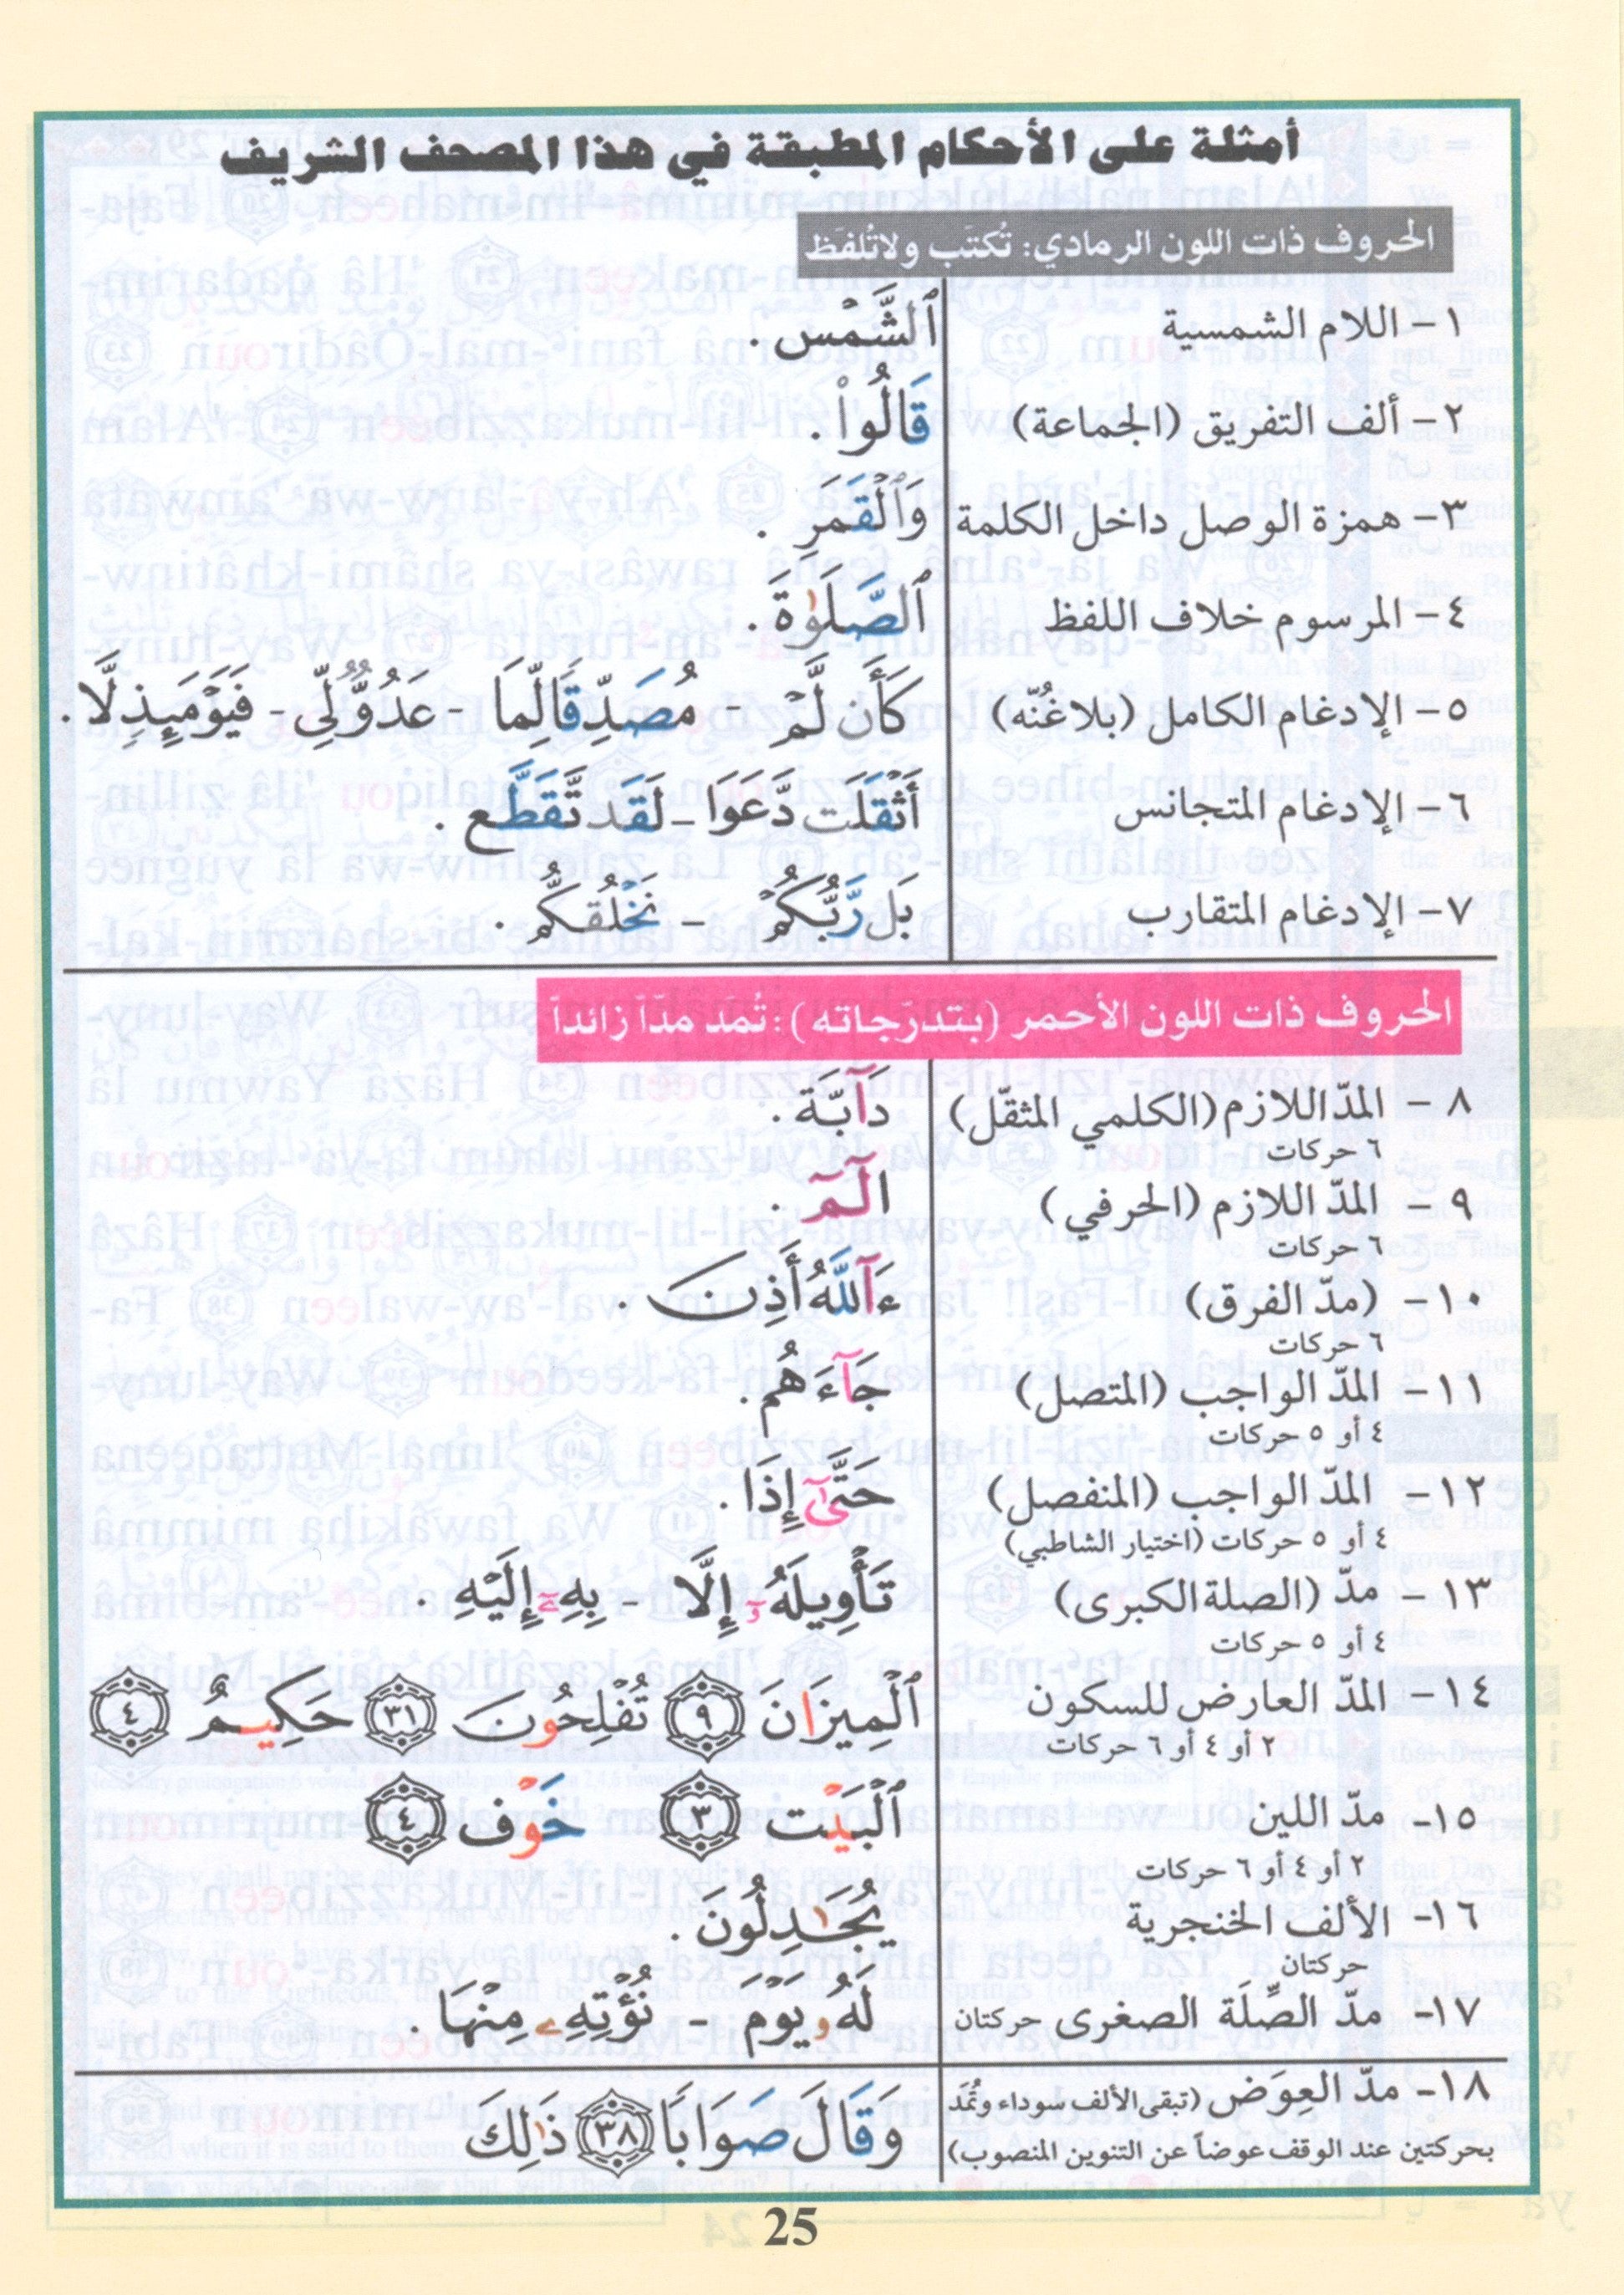 Tajweed Quran Juz' Tabarak Part 29 with Translation and Transliteration 7 x 9